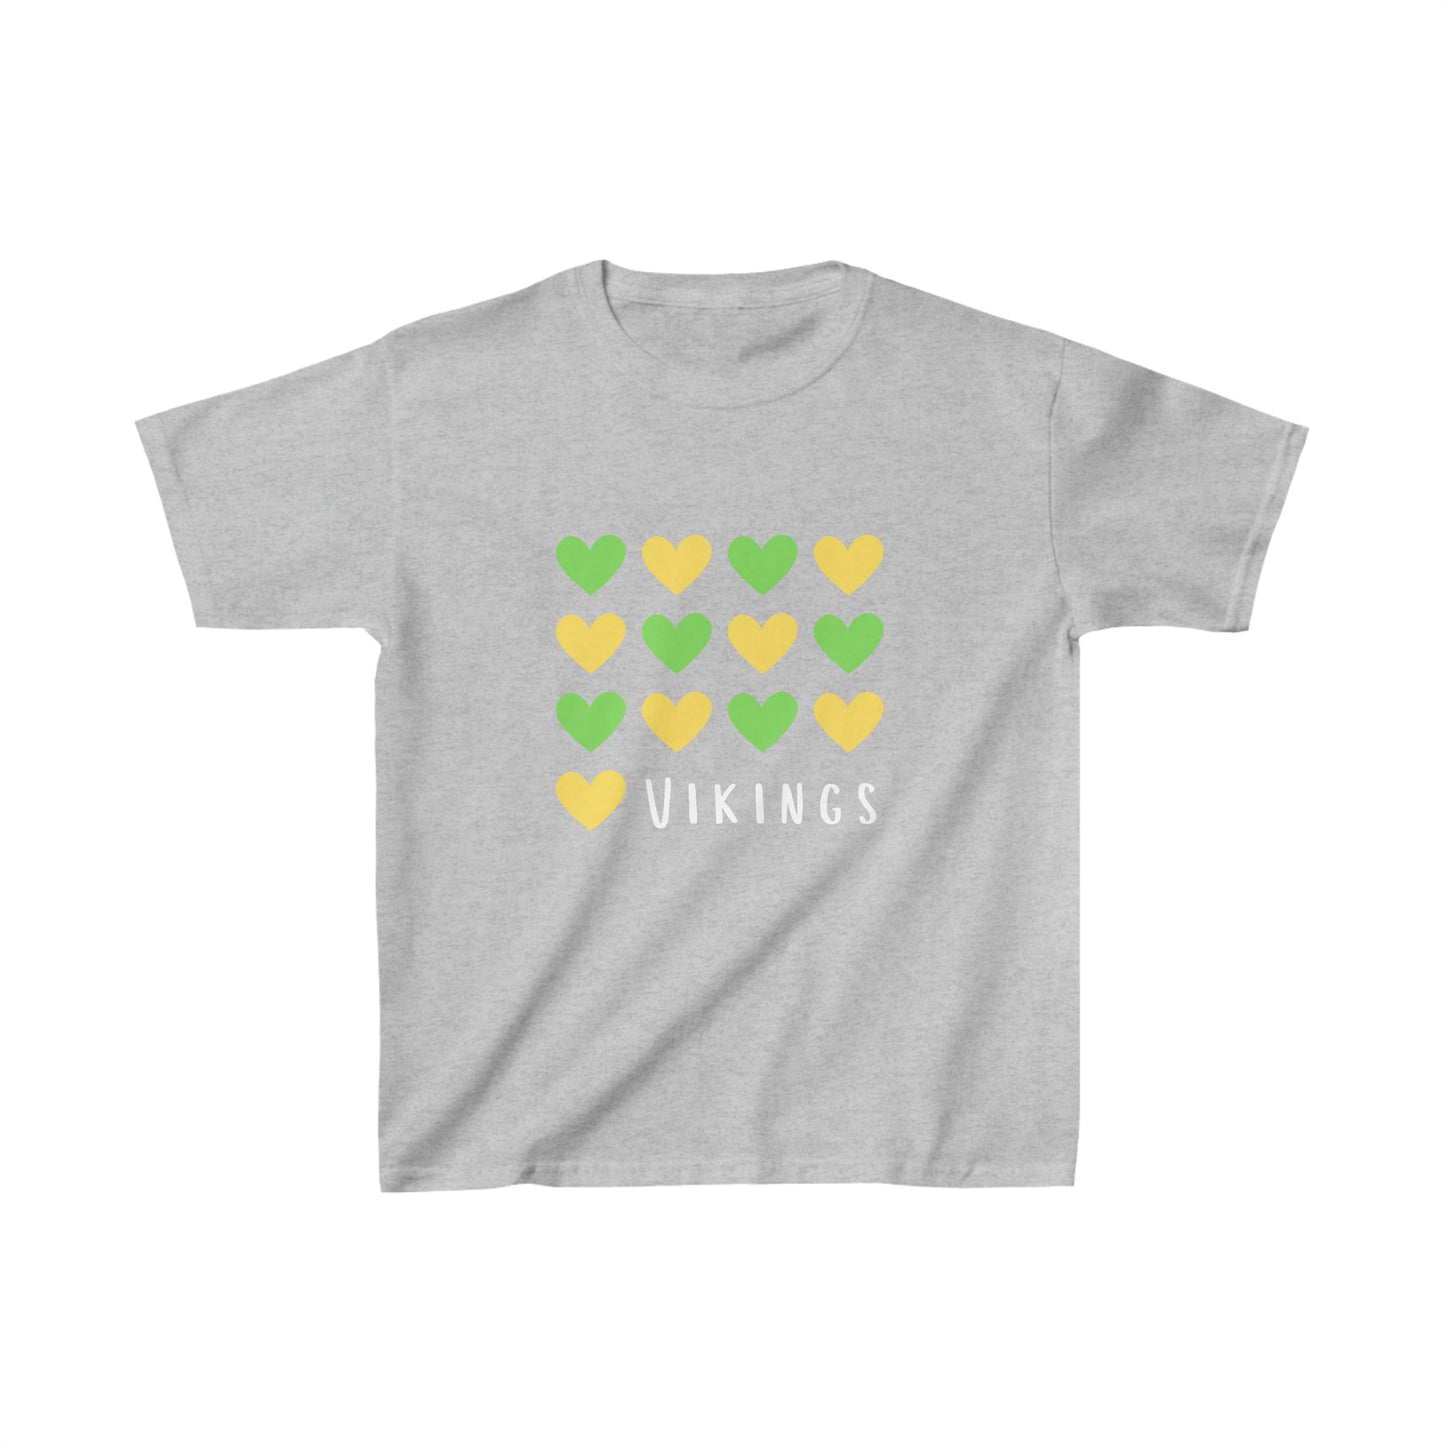 I HEART Vikings - Kids T-Shirt